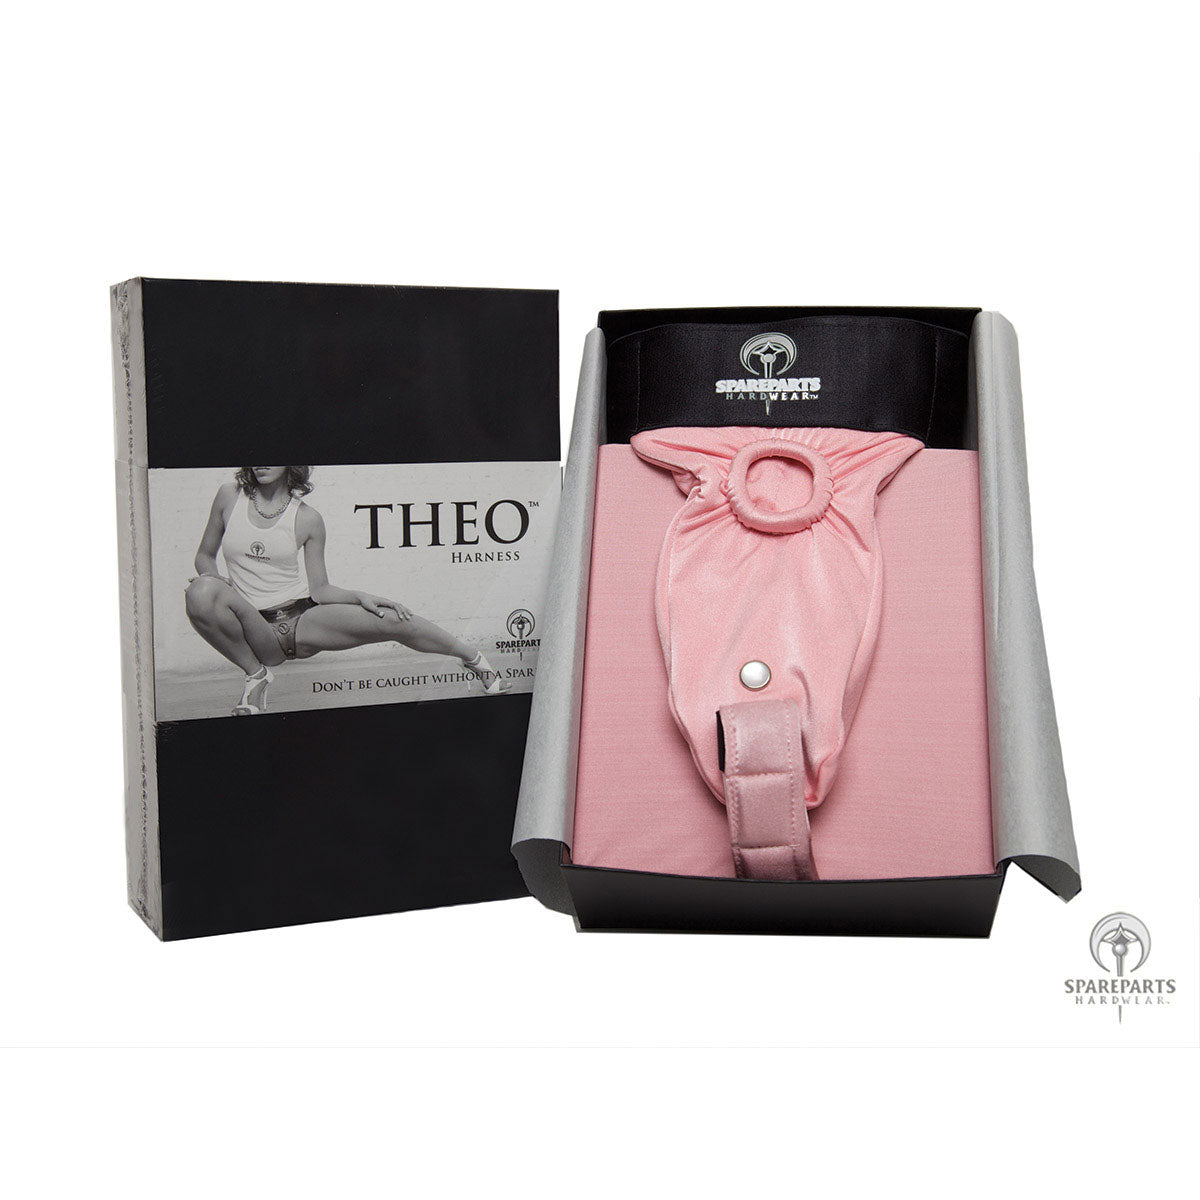 SpareParts Hardwear Theo Thong Strap-On Dildo Harness Pink